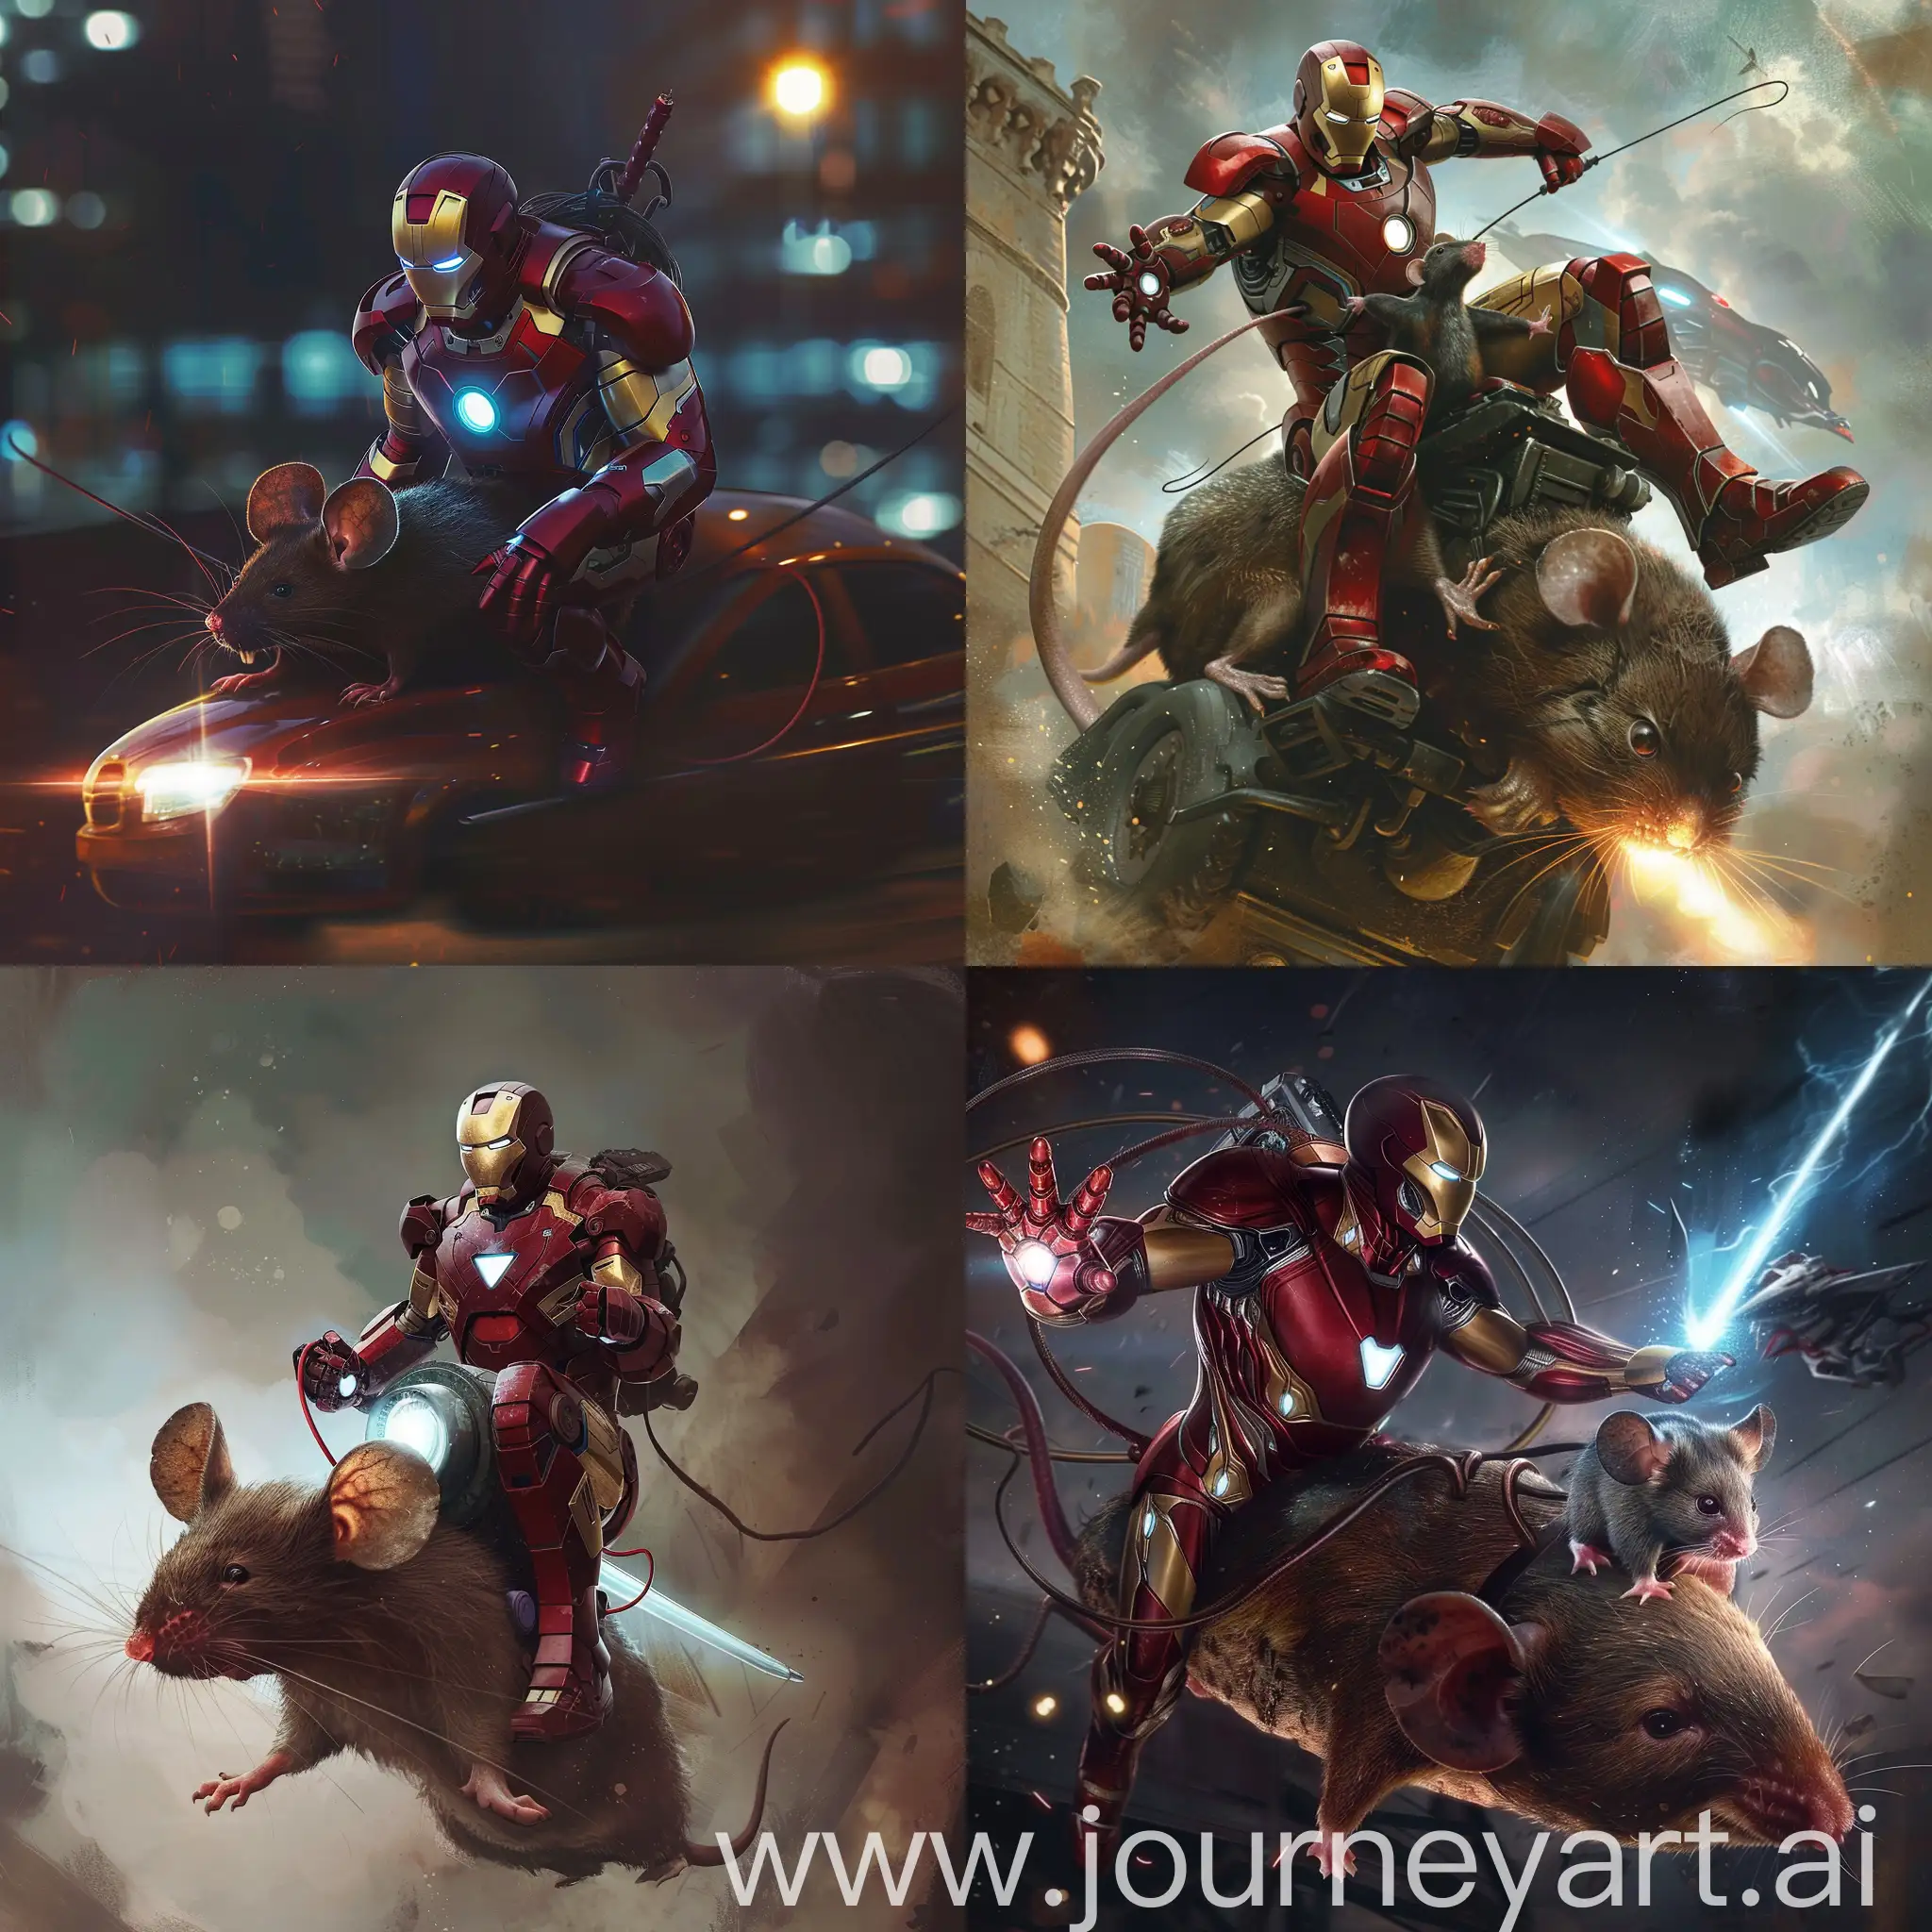 Iron man riding a giant mouse